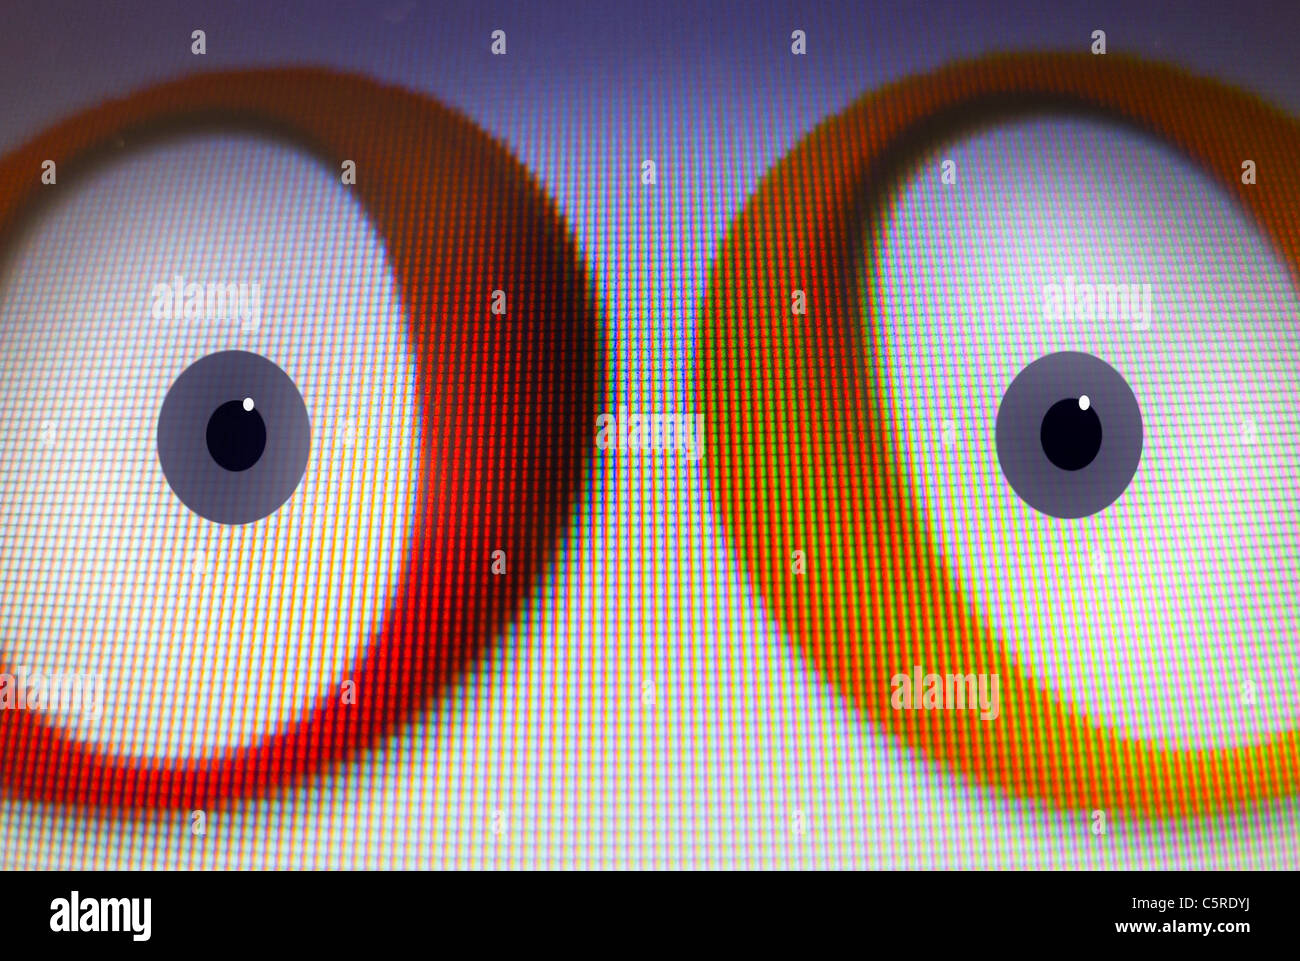 Google's 'OO' with eyes digitally added. Stock Photo